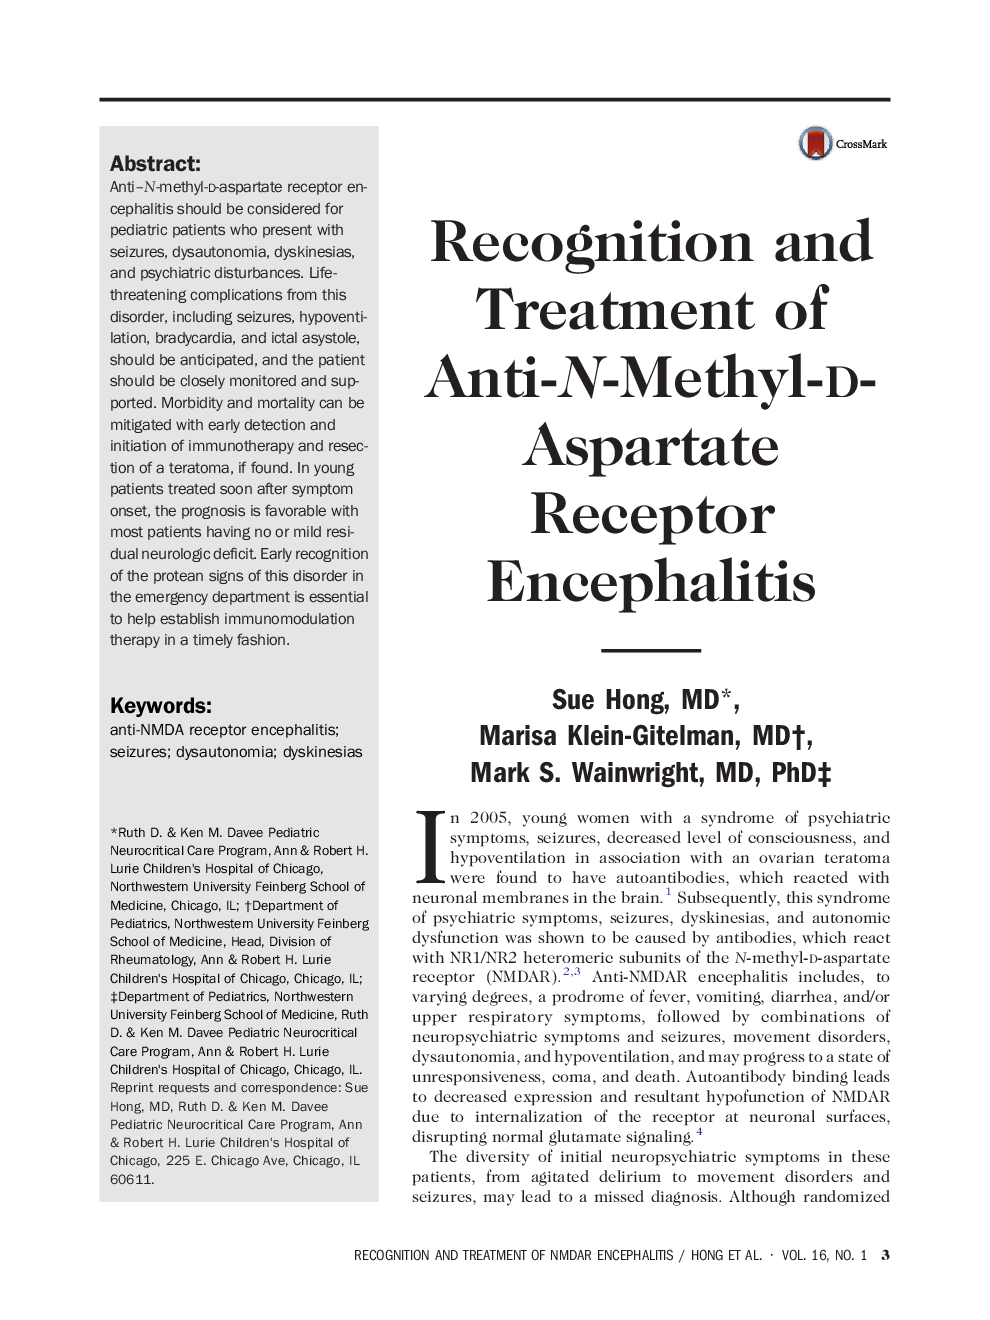 Recognition and Treatment of Anti-N-Methyl-d-Aspartate Receptor Encephalitis 